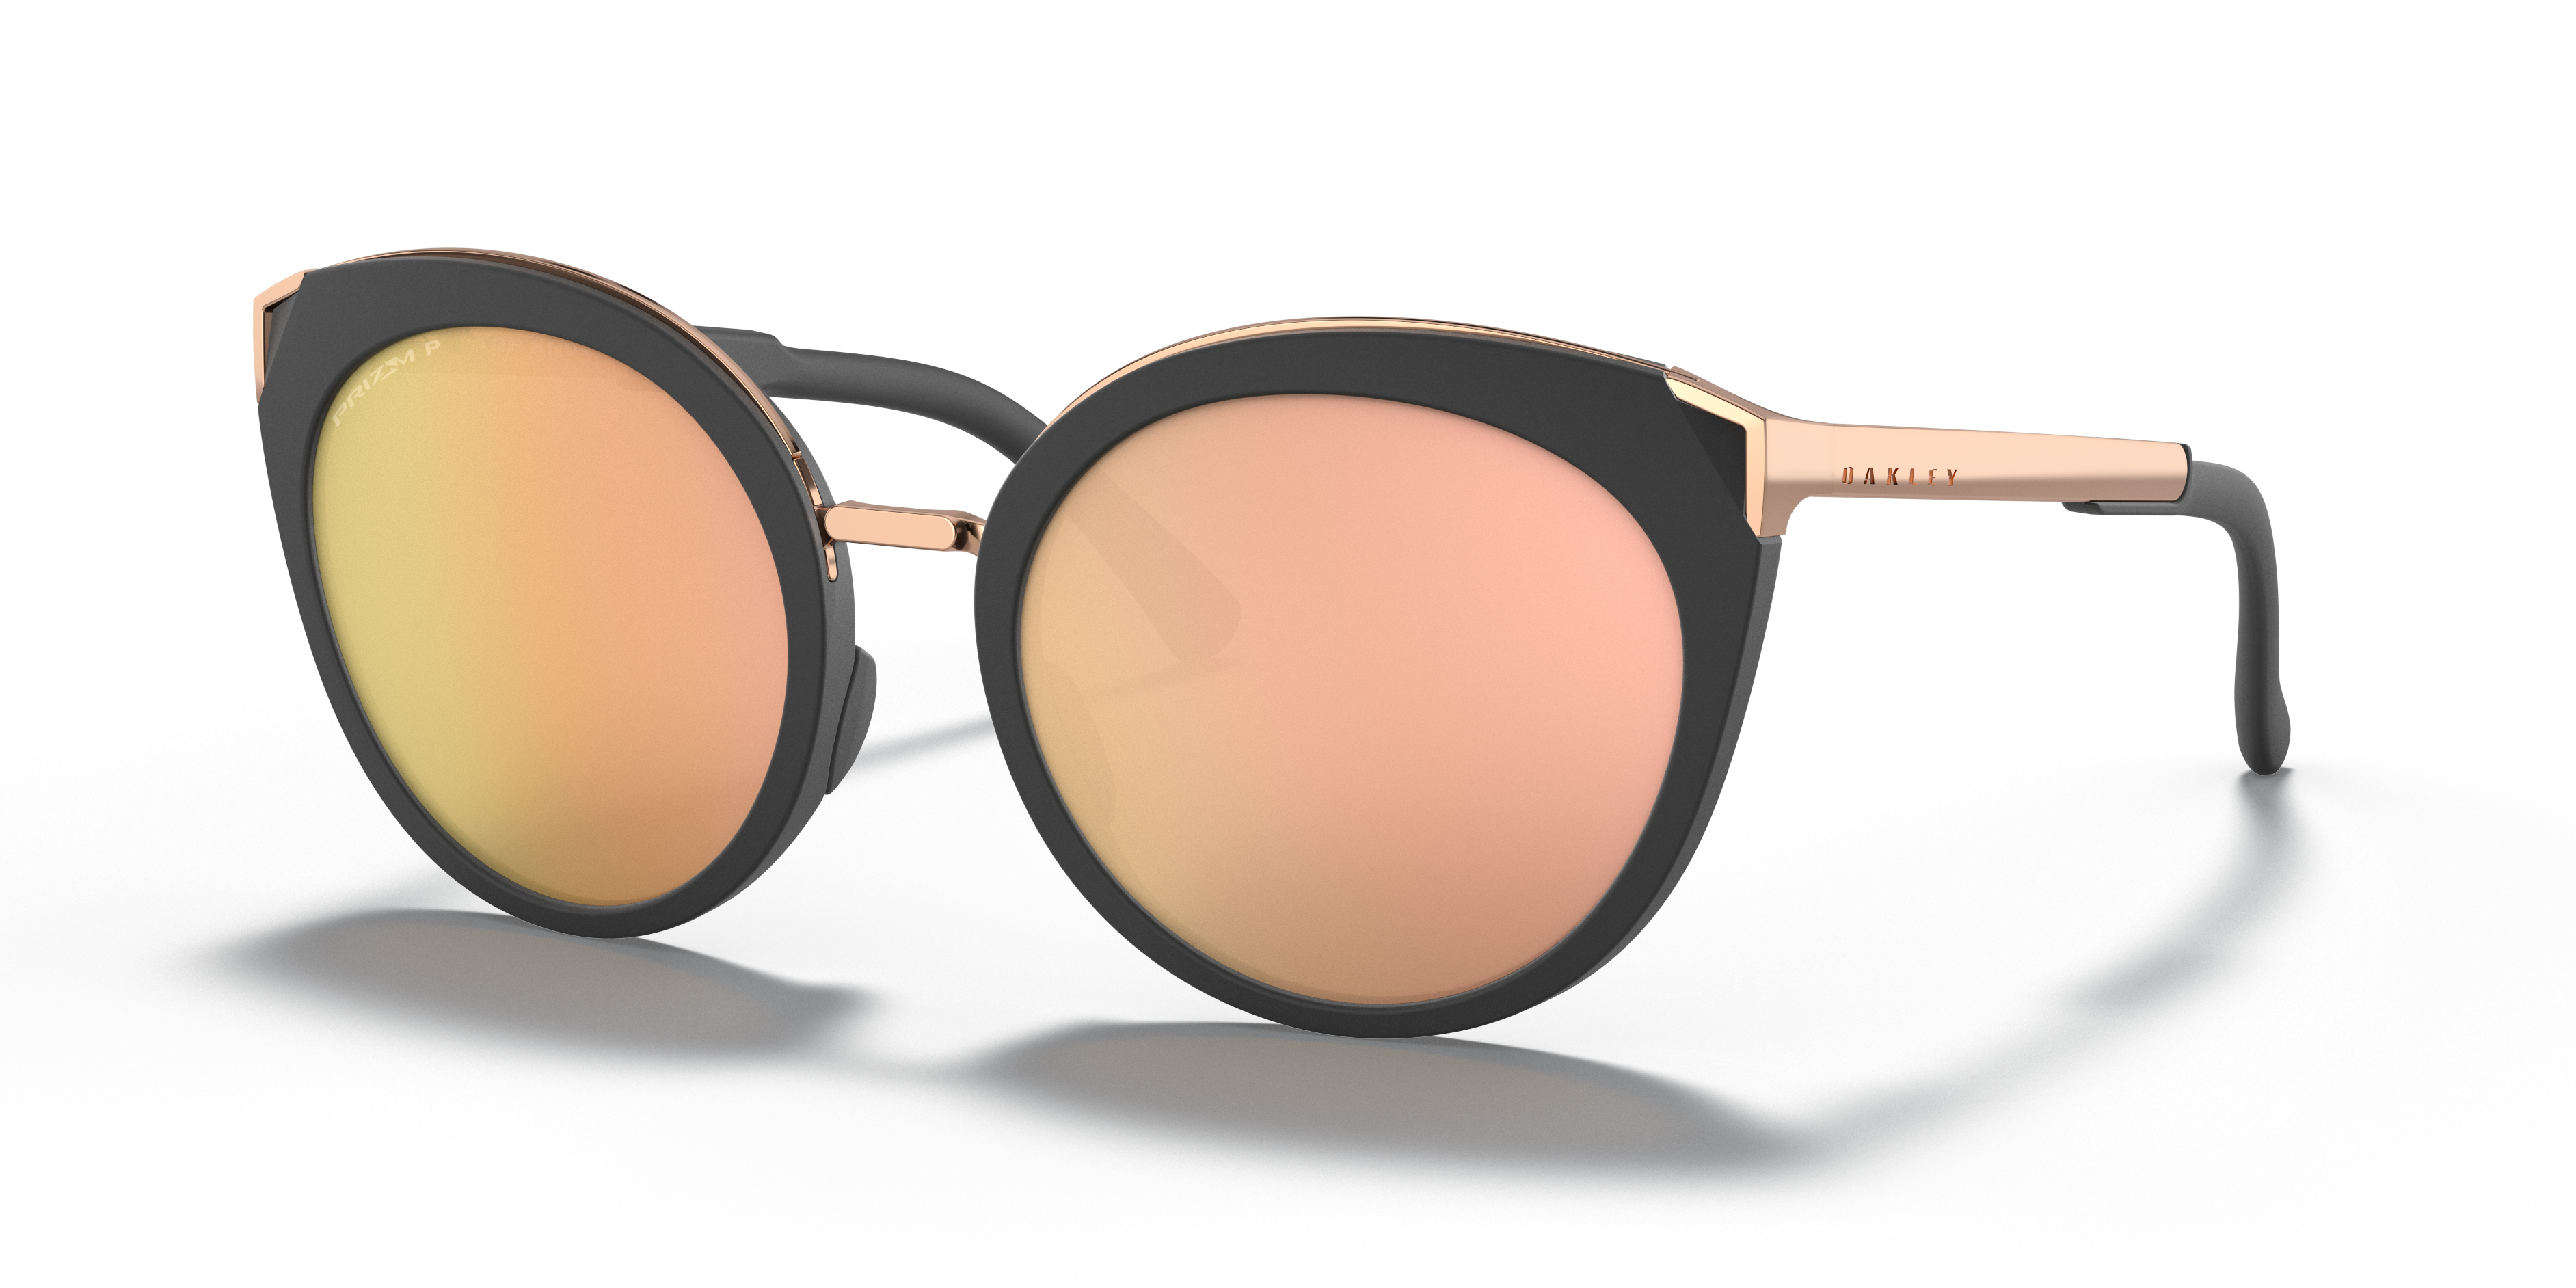 pink frame oakley sunglasses